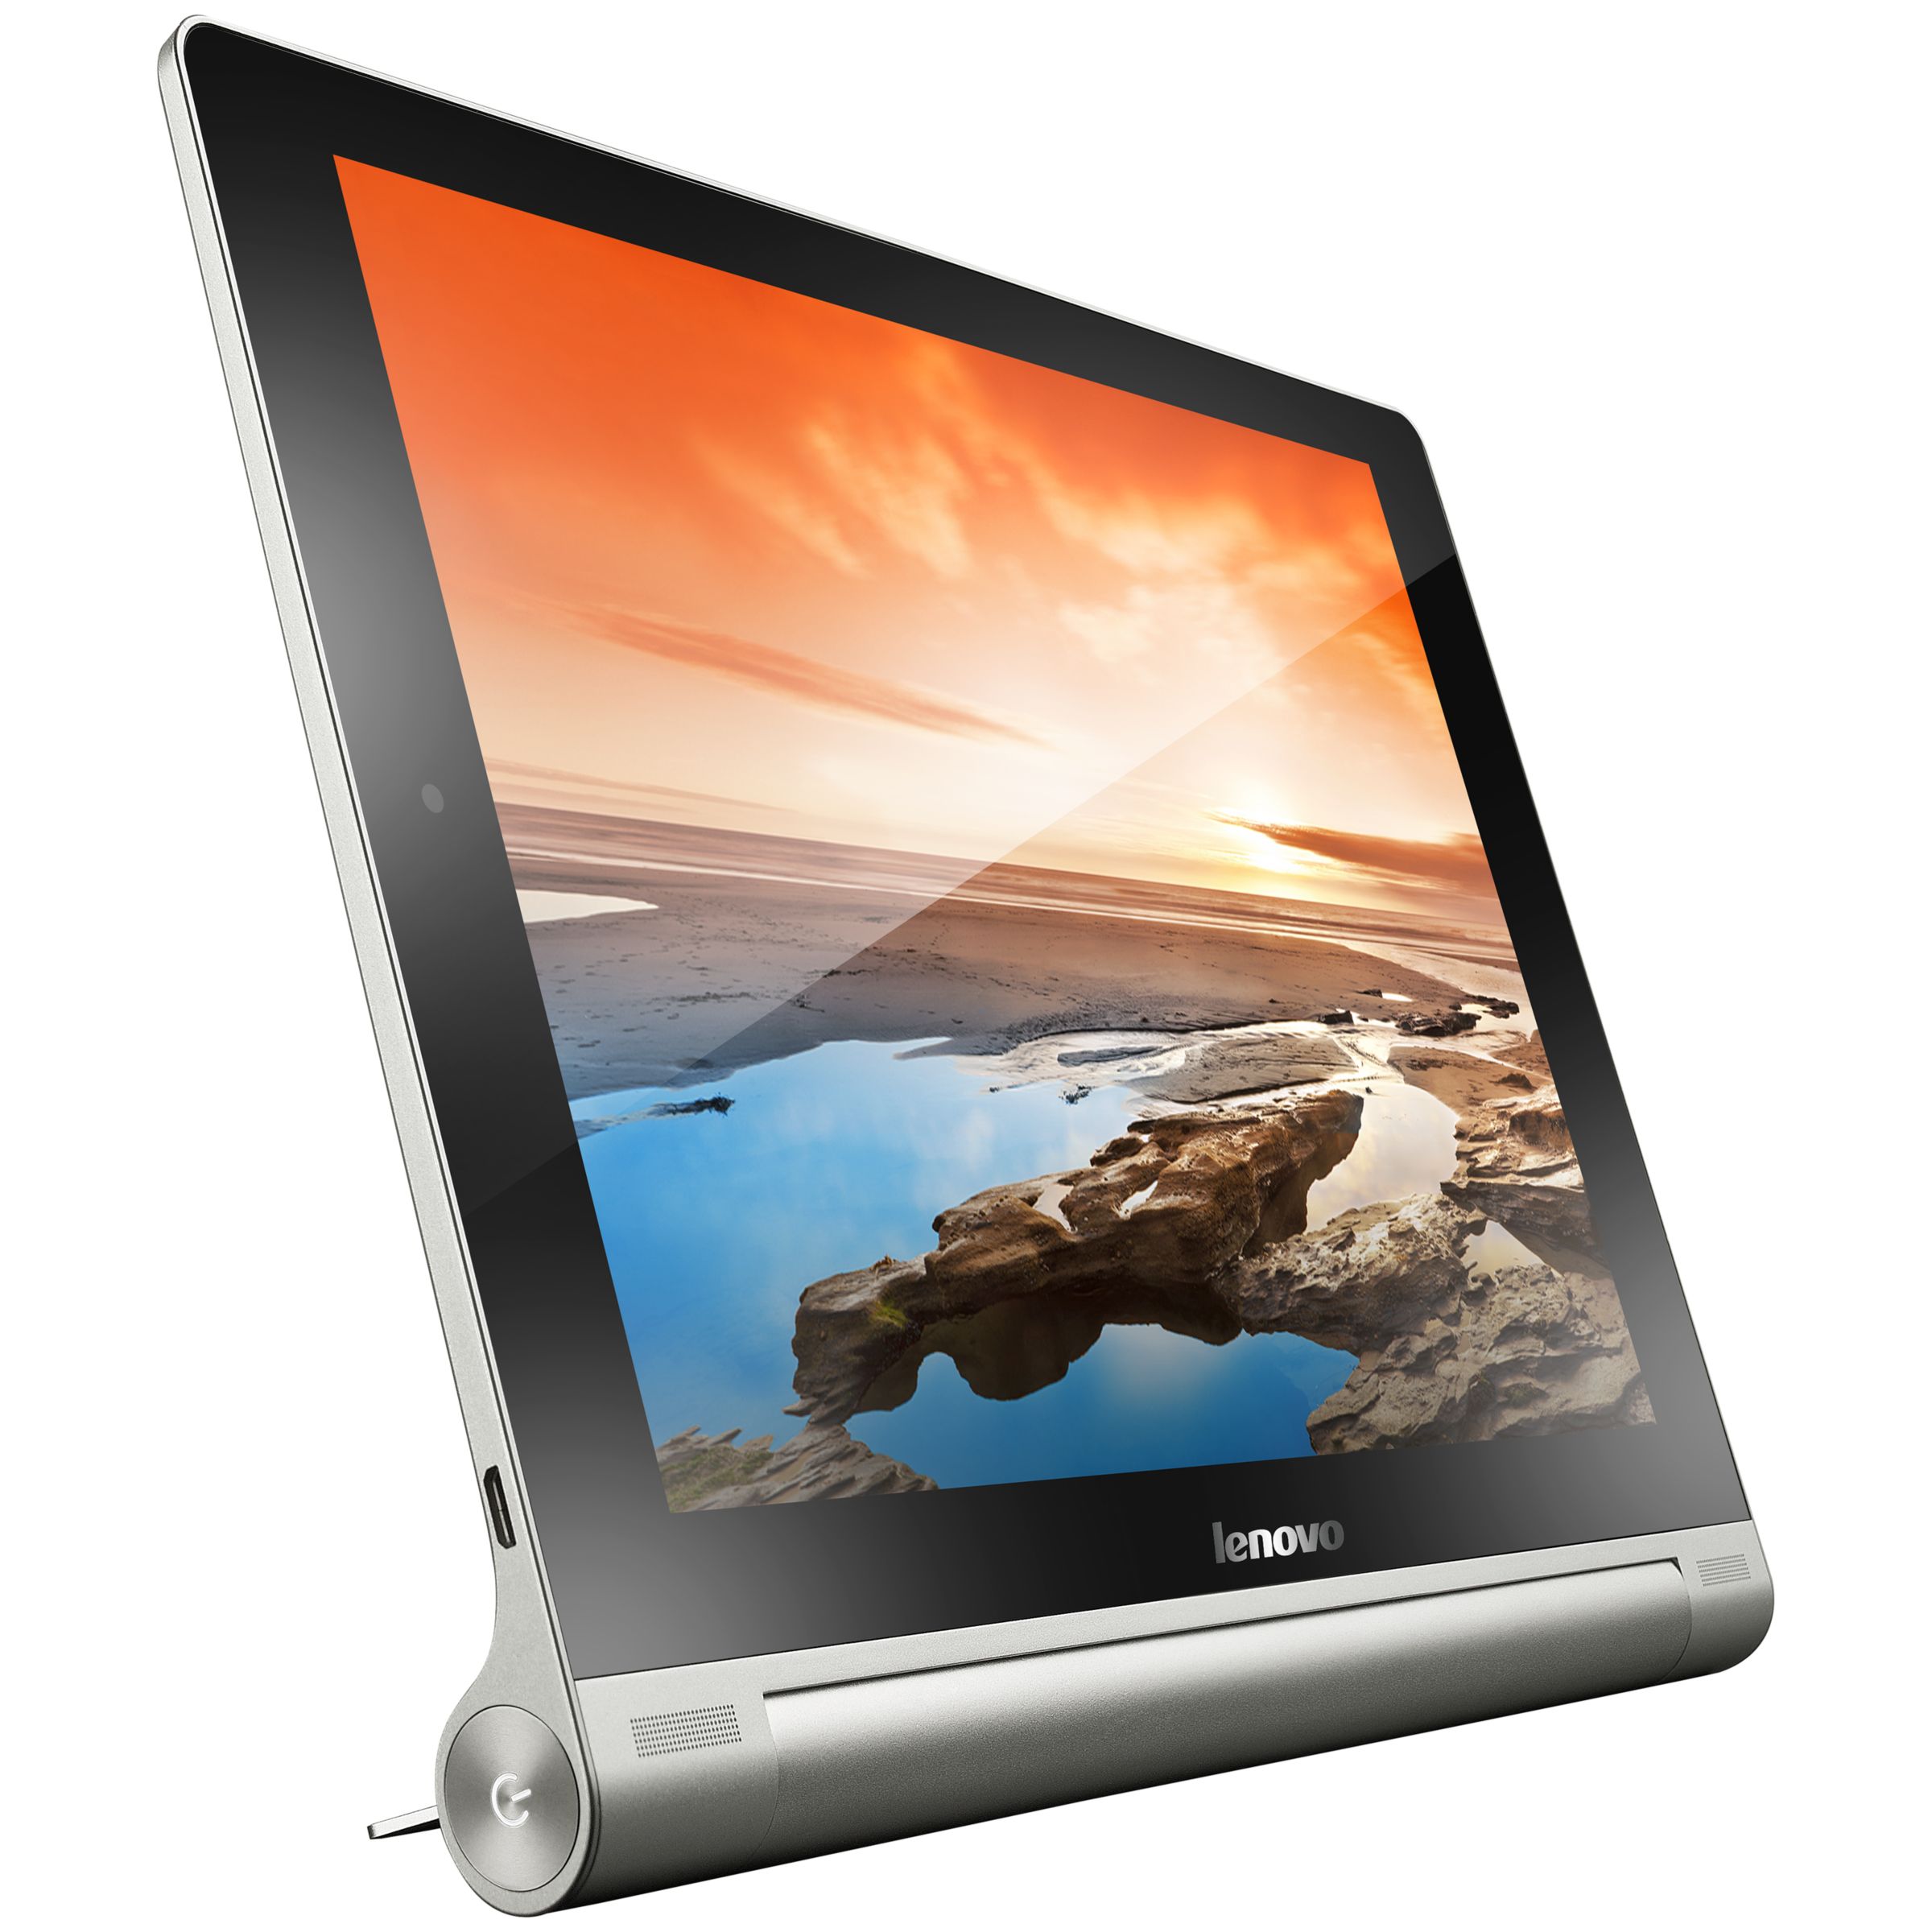 Lenovo Yoga Tablet 10, Quad-core Processor, Android, 10”, Wi-Fi & 3G, 16GB, Silver